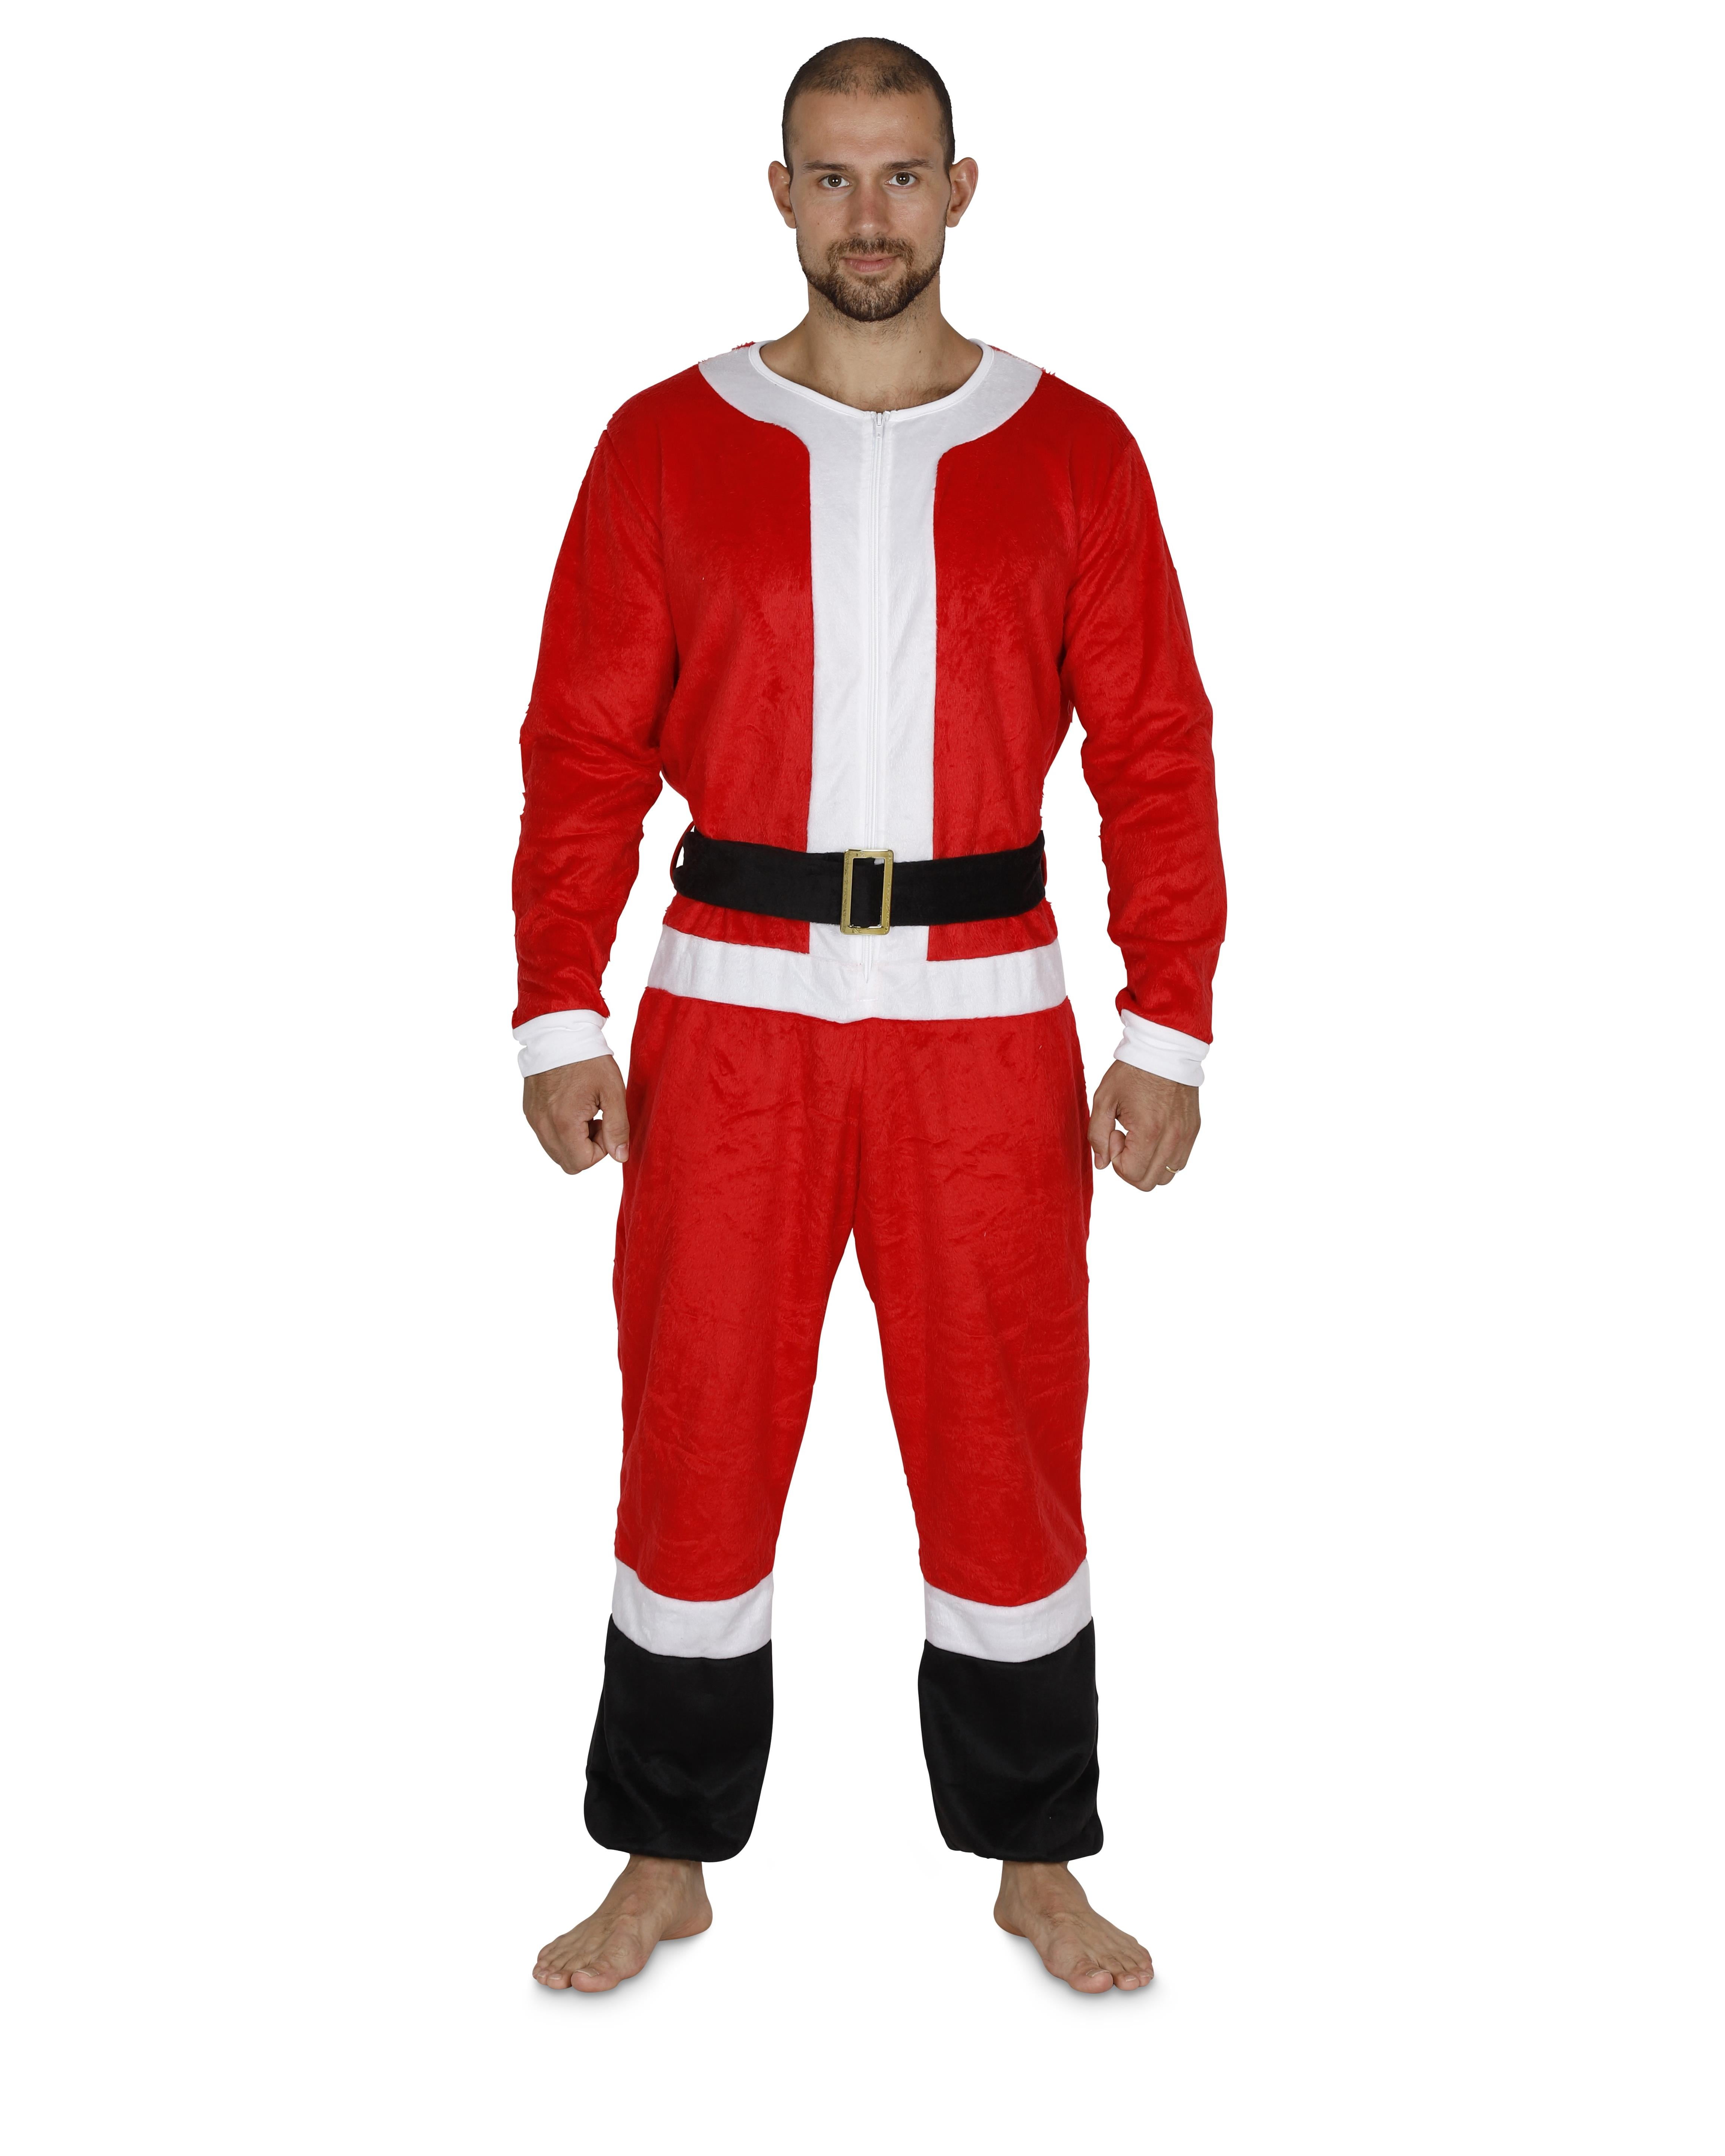 NEW Holiday One Piece Pajamas Santa Union Suit & Hat Kids SZ M 7-8 